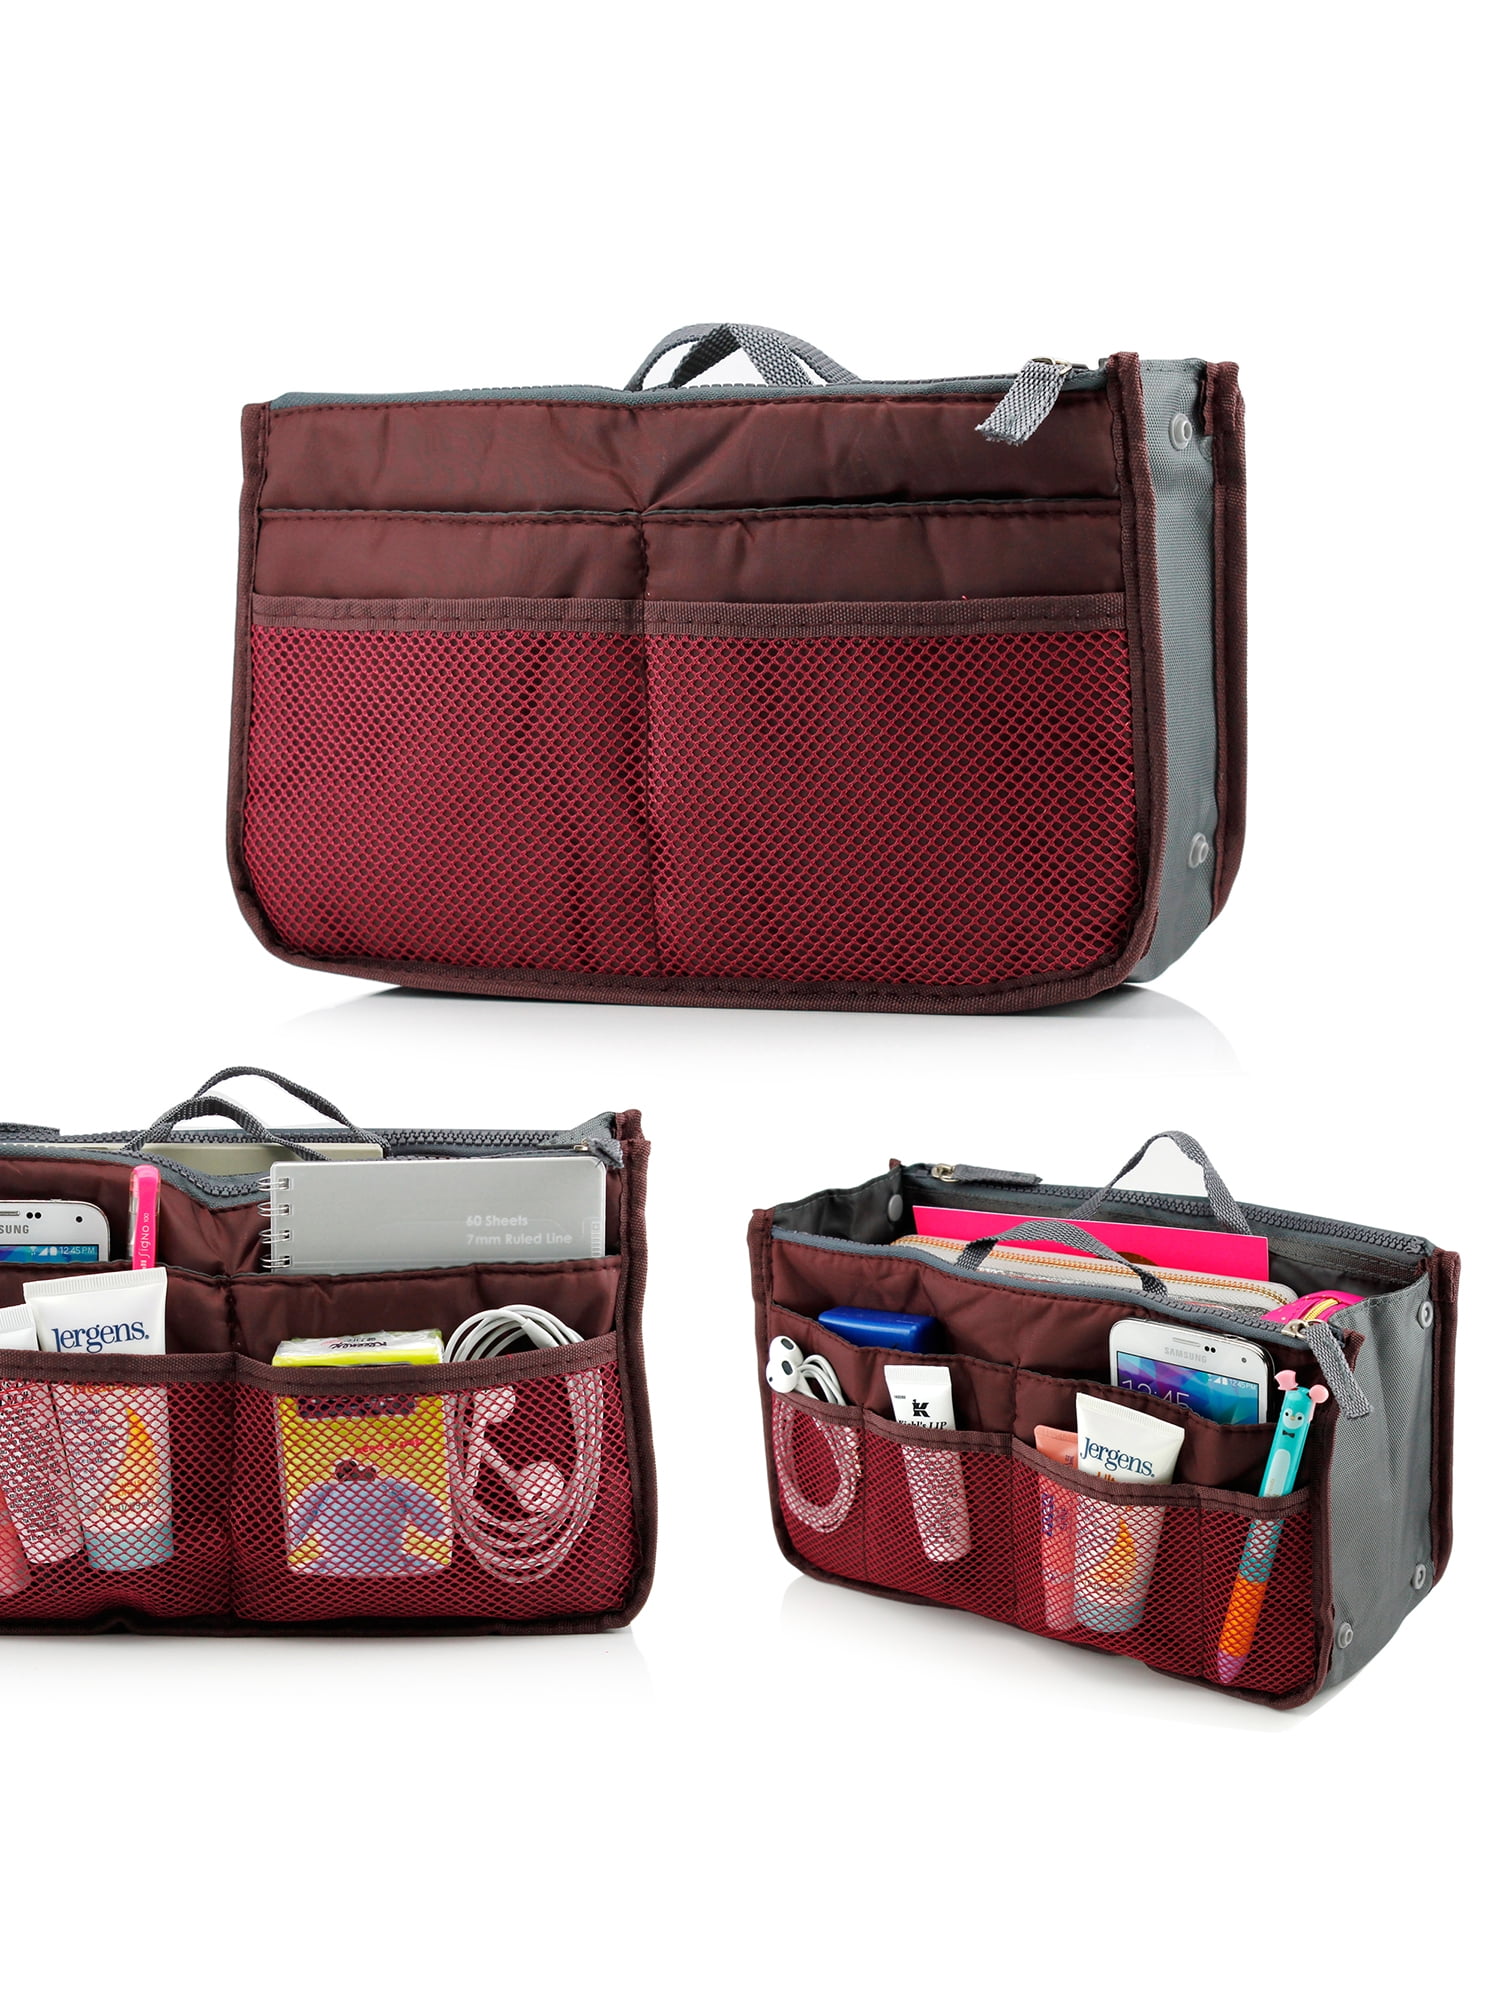 Travel Insert Organizer Compartment Handbag Tote Black Bag by Success.Store.